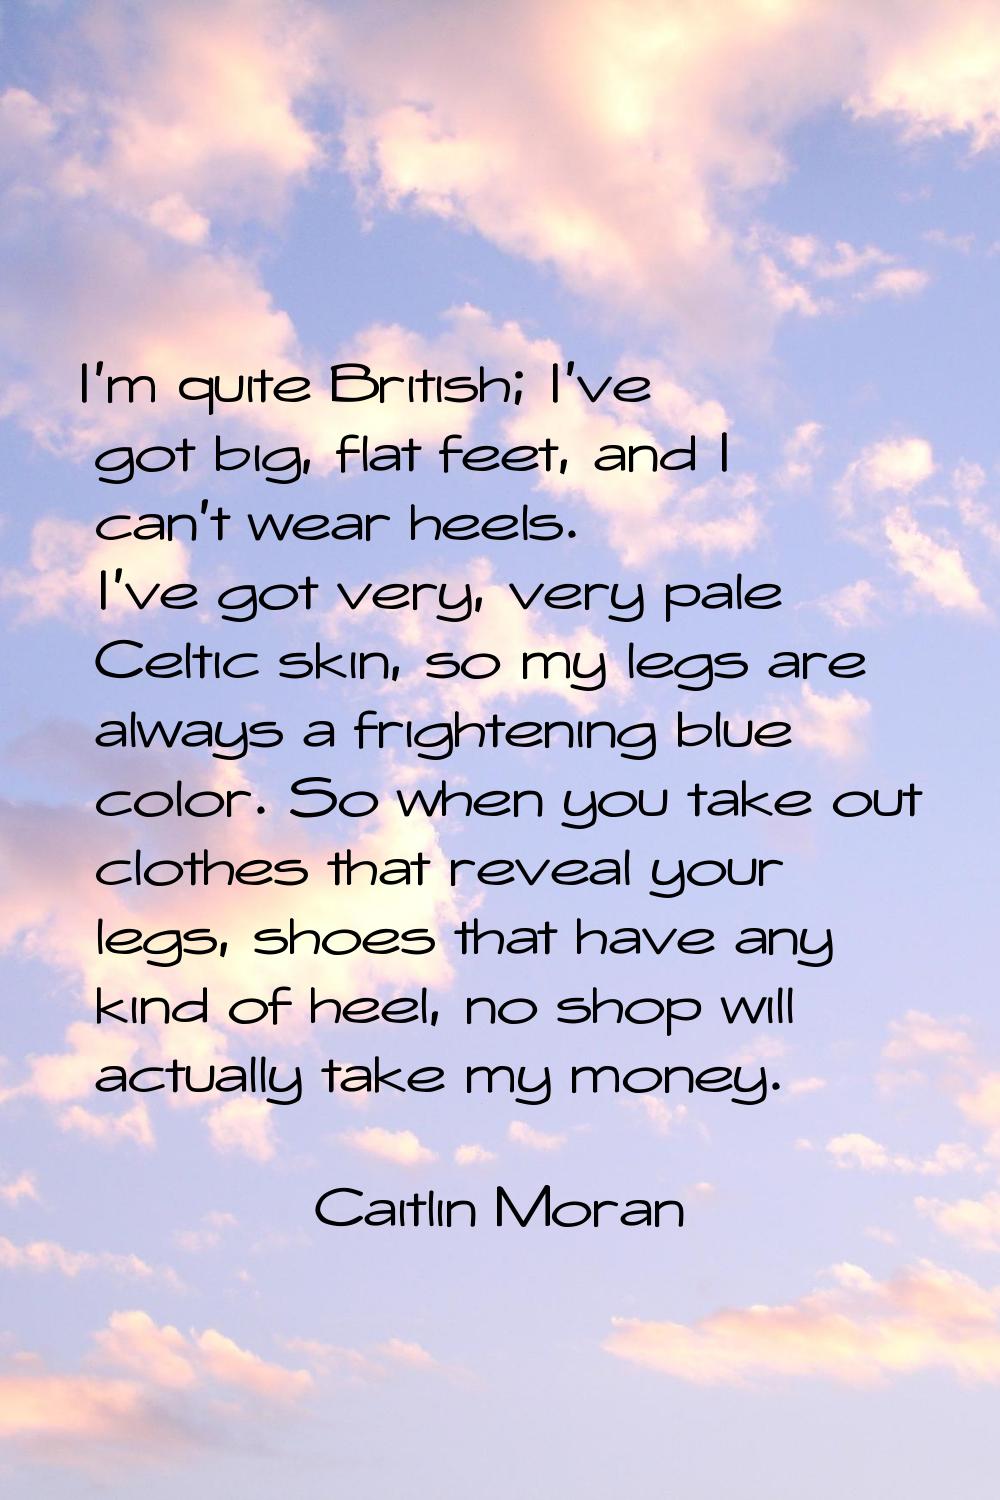 I'm quite British; I've got big, flat feet, and I can't wear heels. I've got very, very pale Celtic